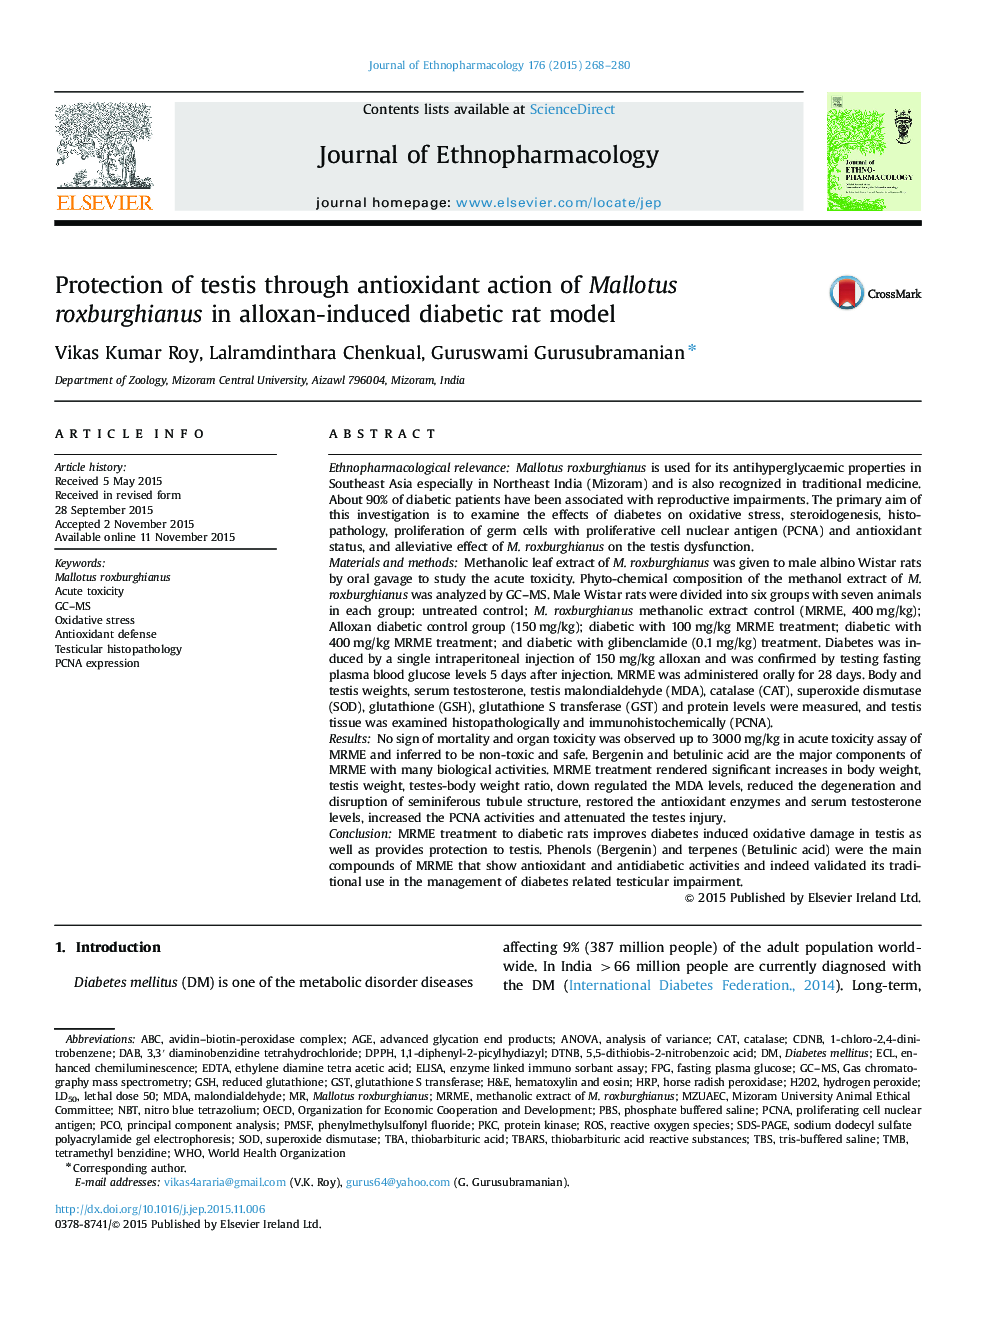 Protection of testis through antioxidant action of Mallotus roxburghianus in alloxan-induced diabetic rat model